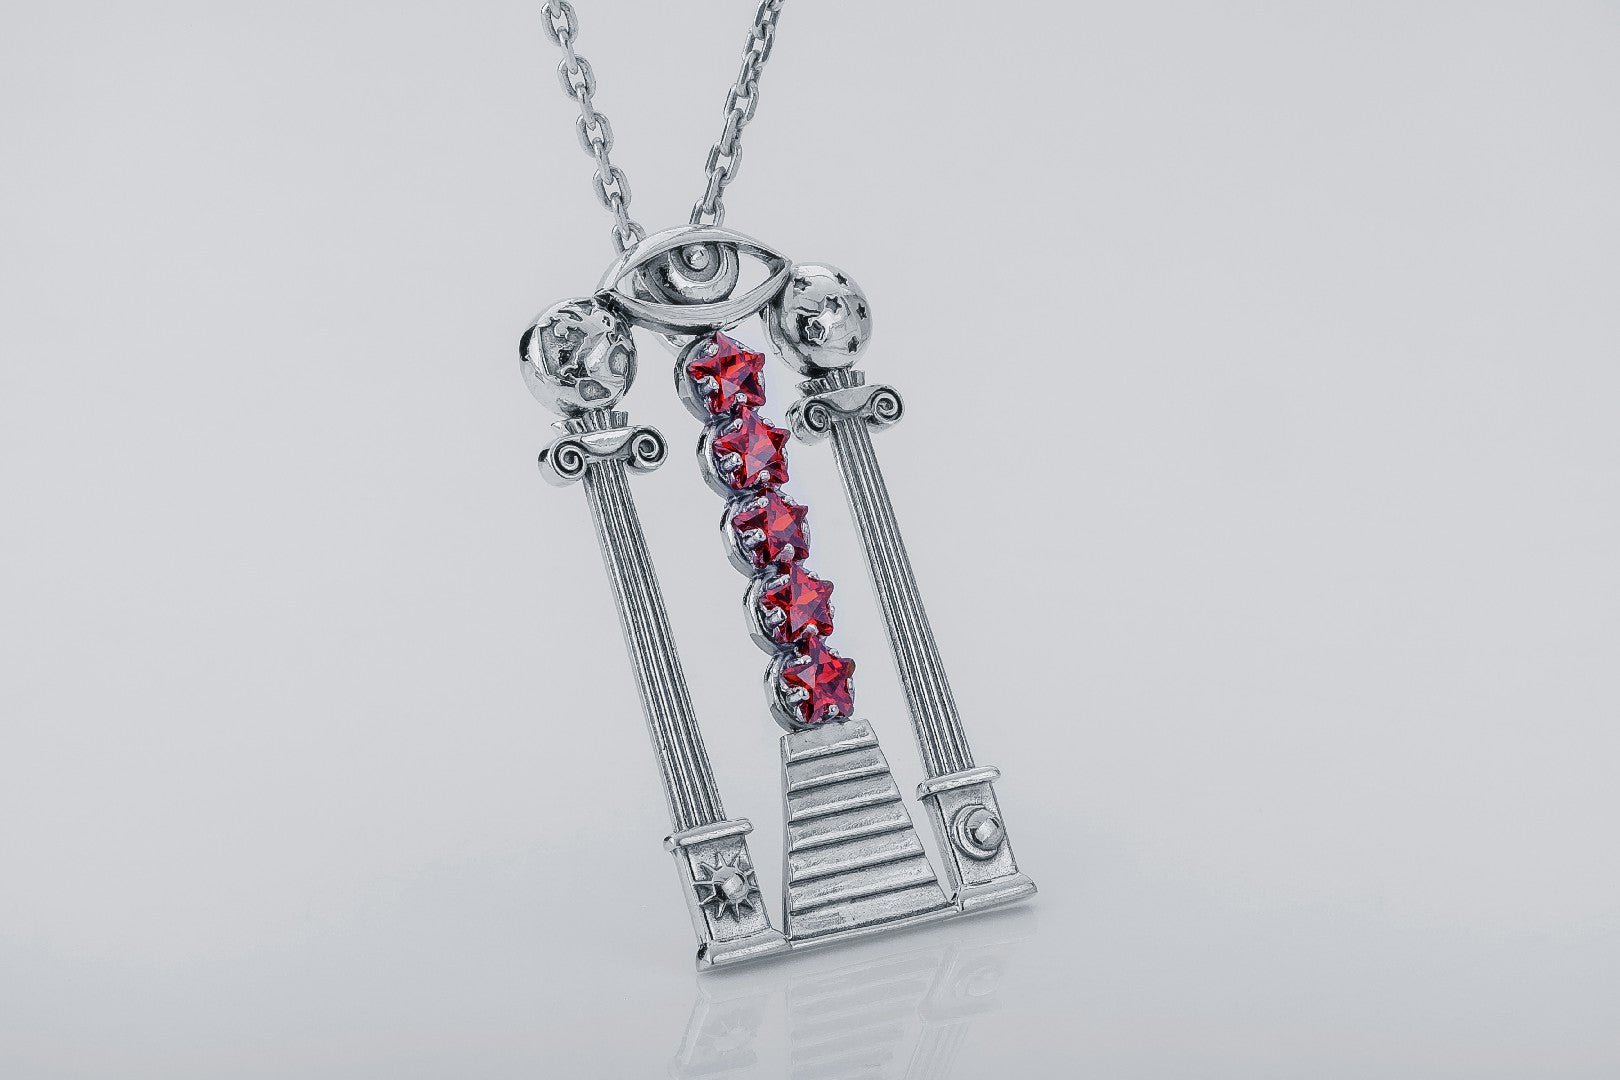 Masonic Pendant with Red Gemstones